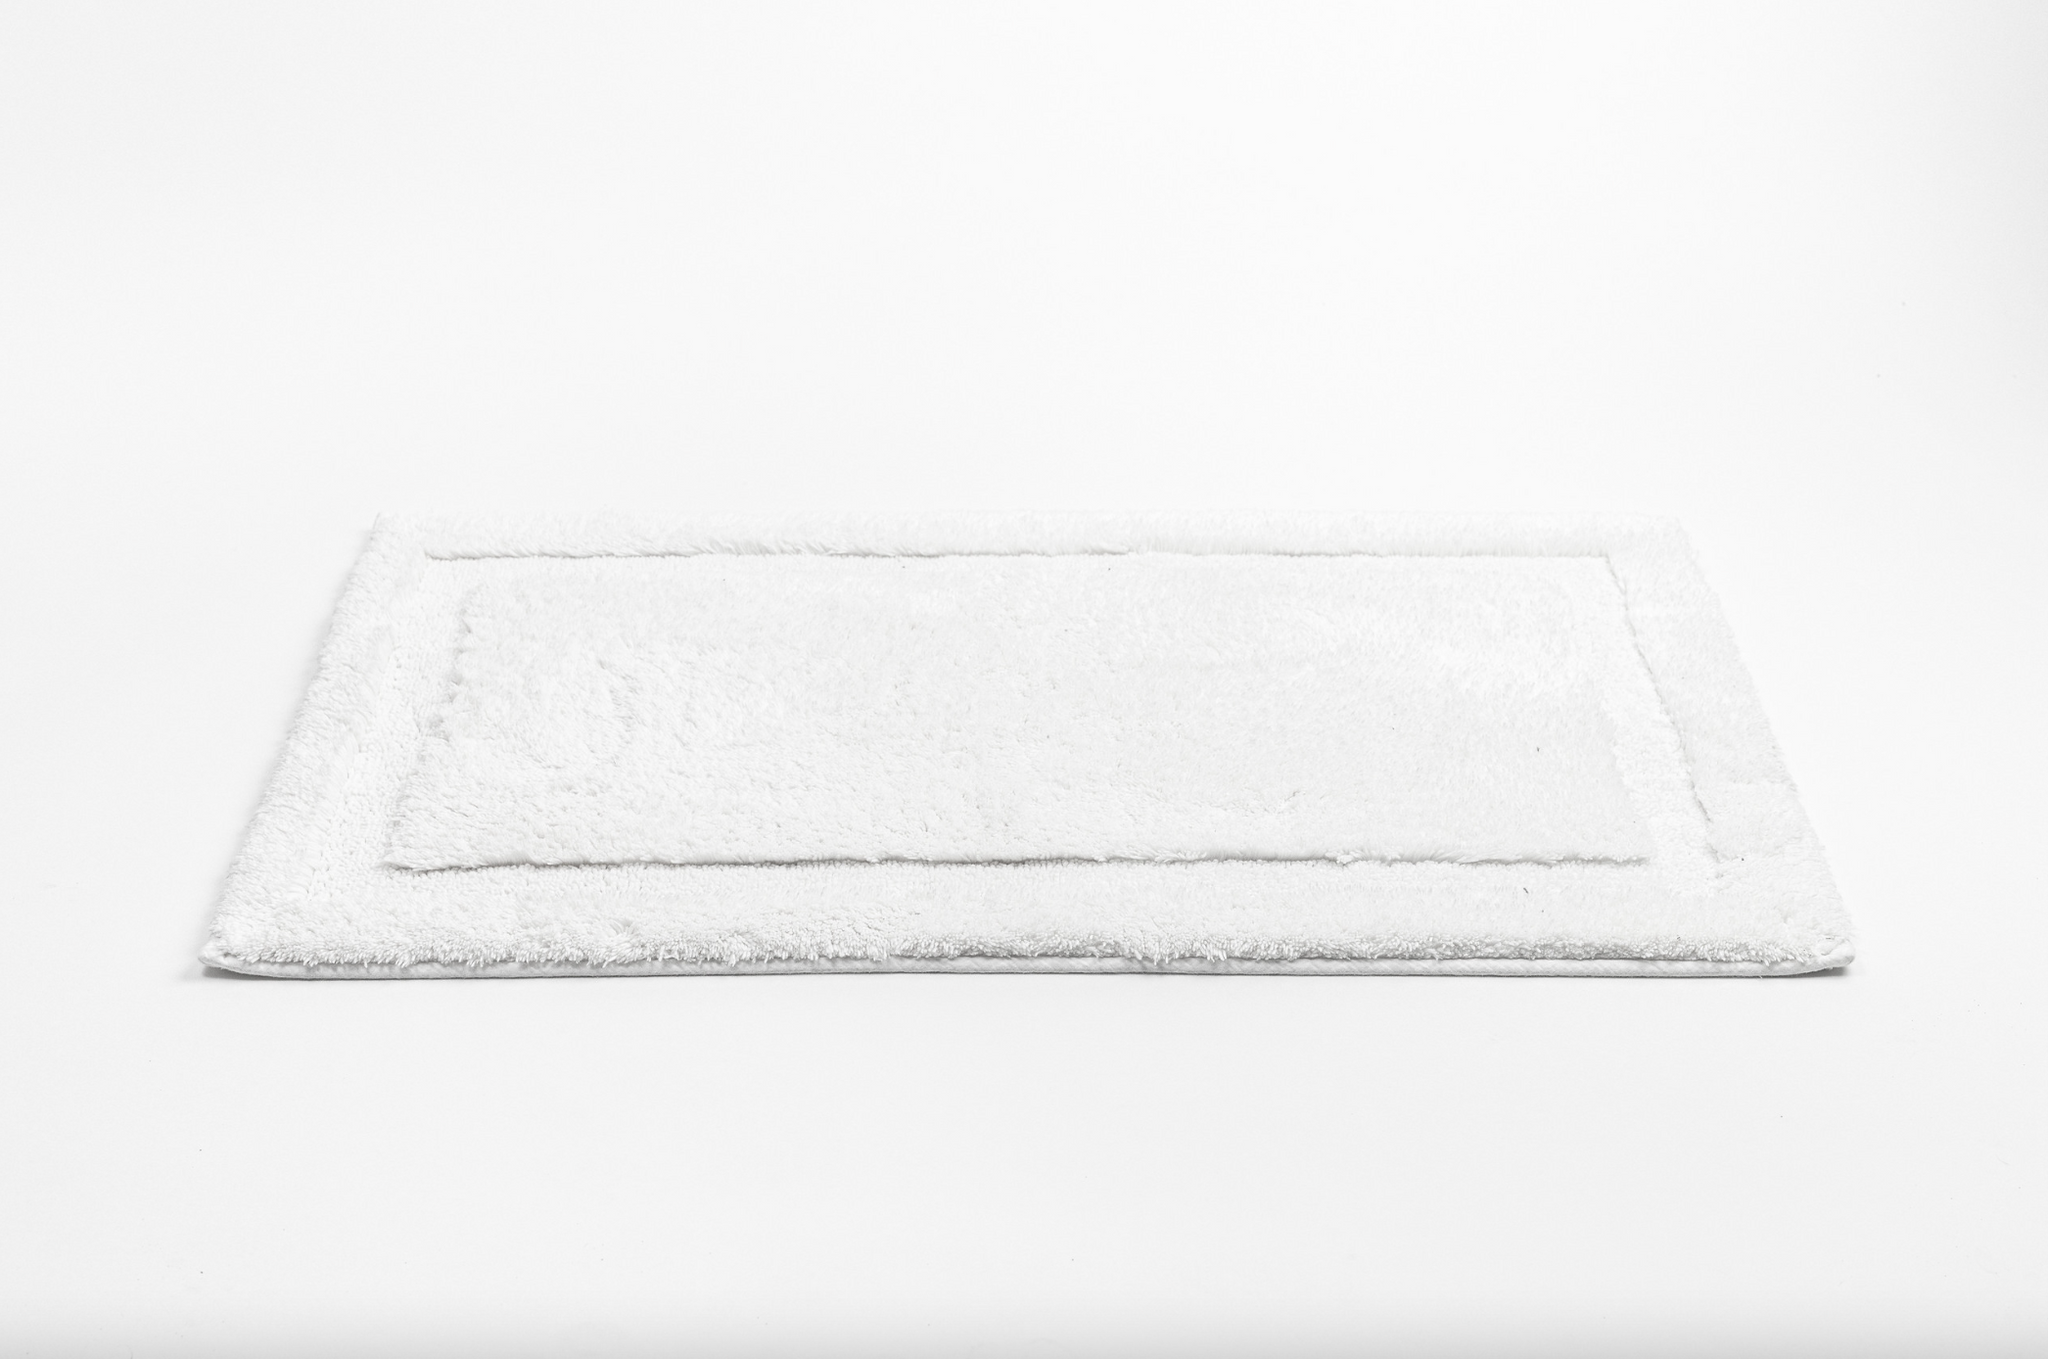 Bath Mats: Luxury Cotton Bathroom Mat